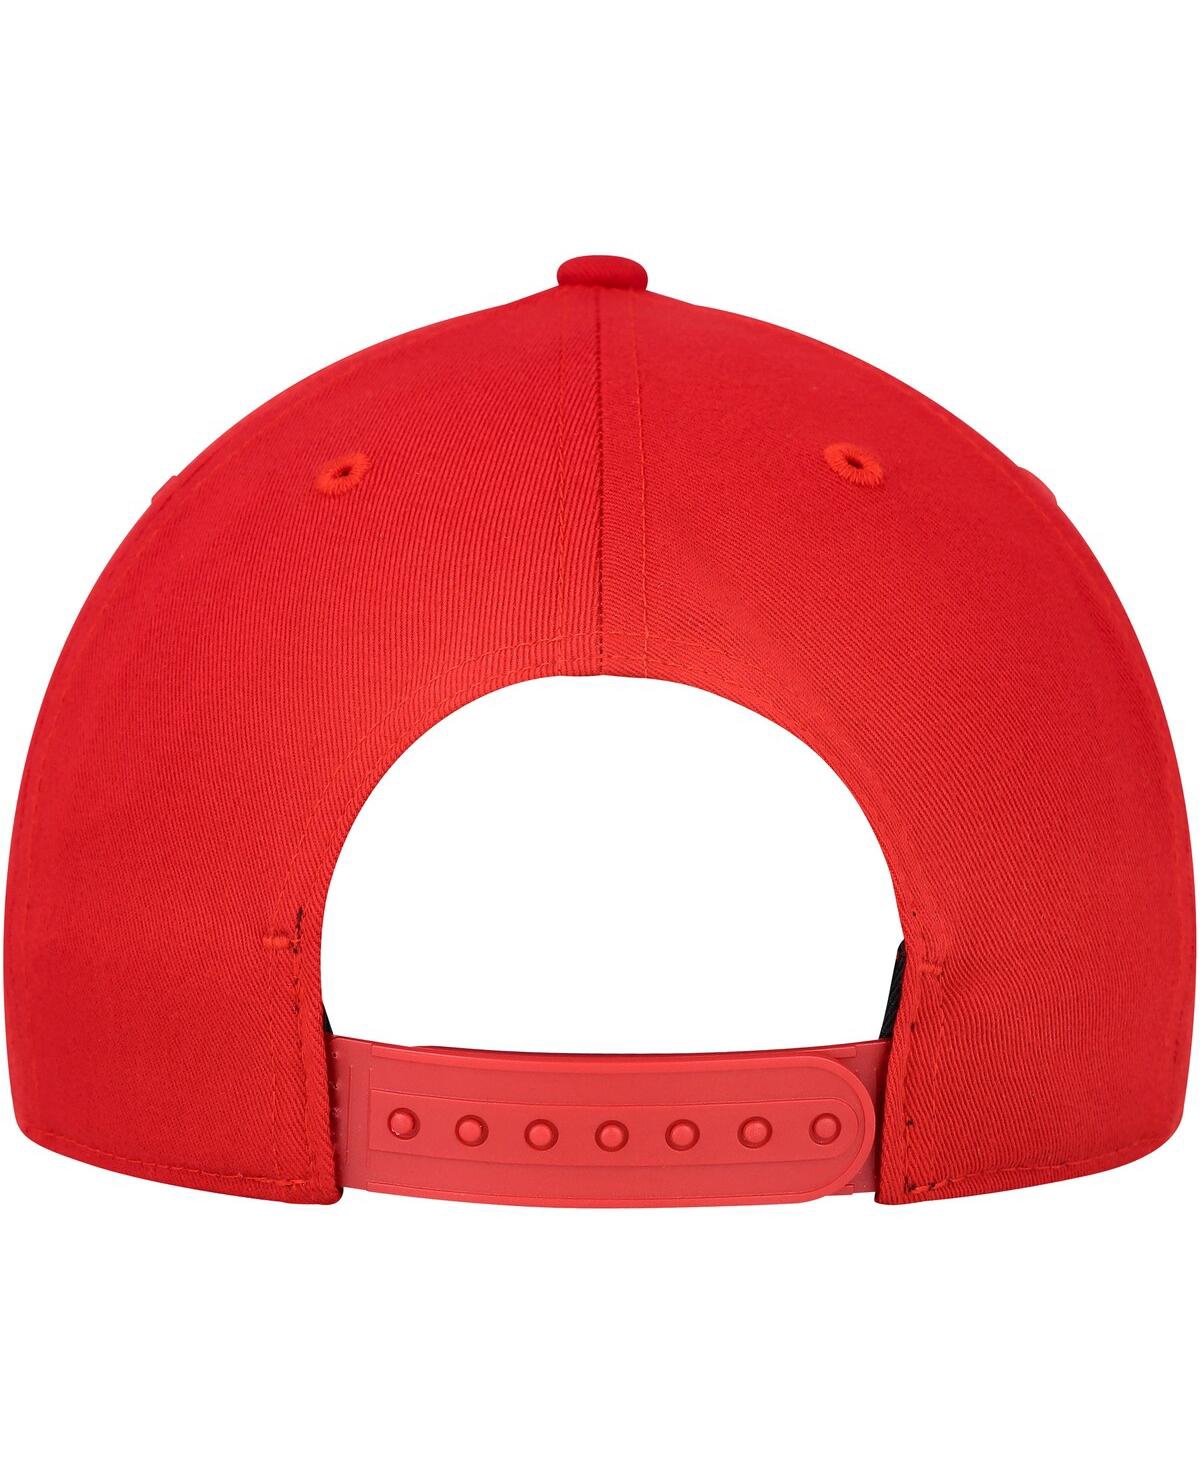 Shop Adidas Originals Men's Adidas Red Nc State Wolfpack Established Snapback Hat